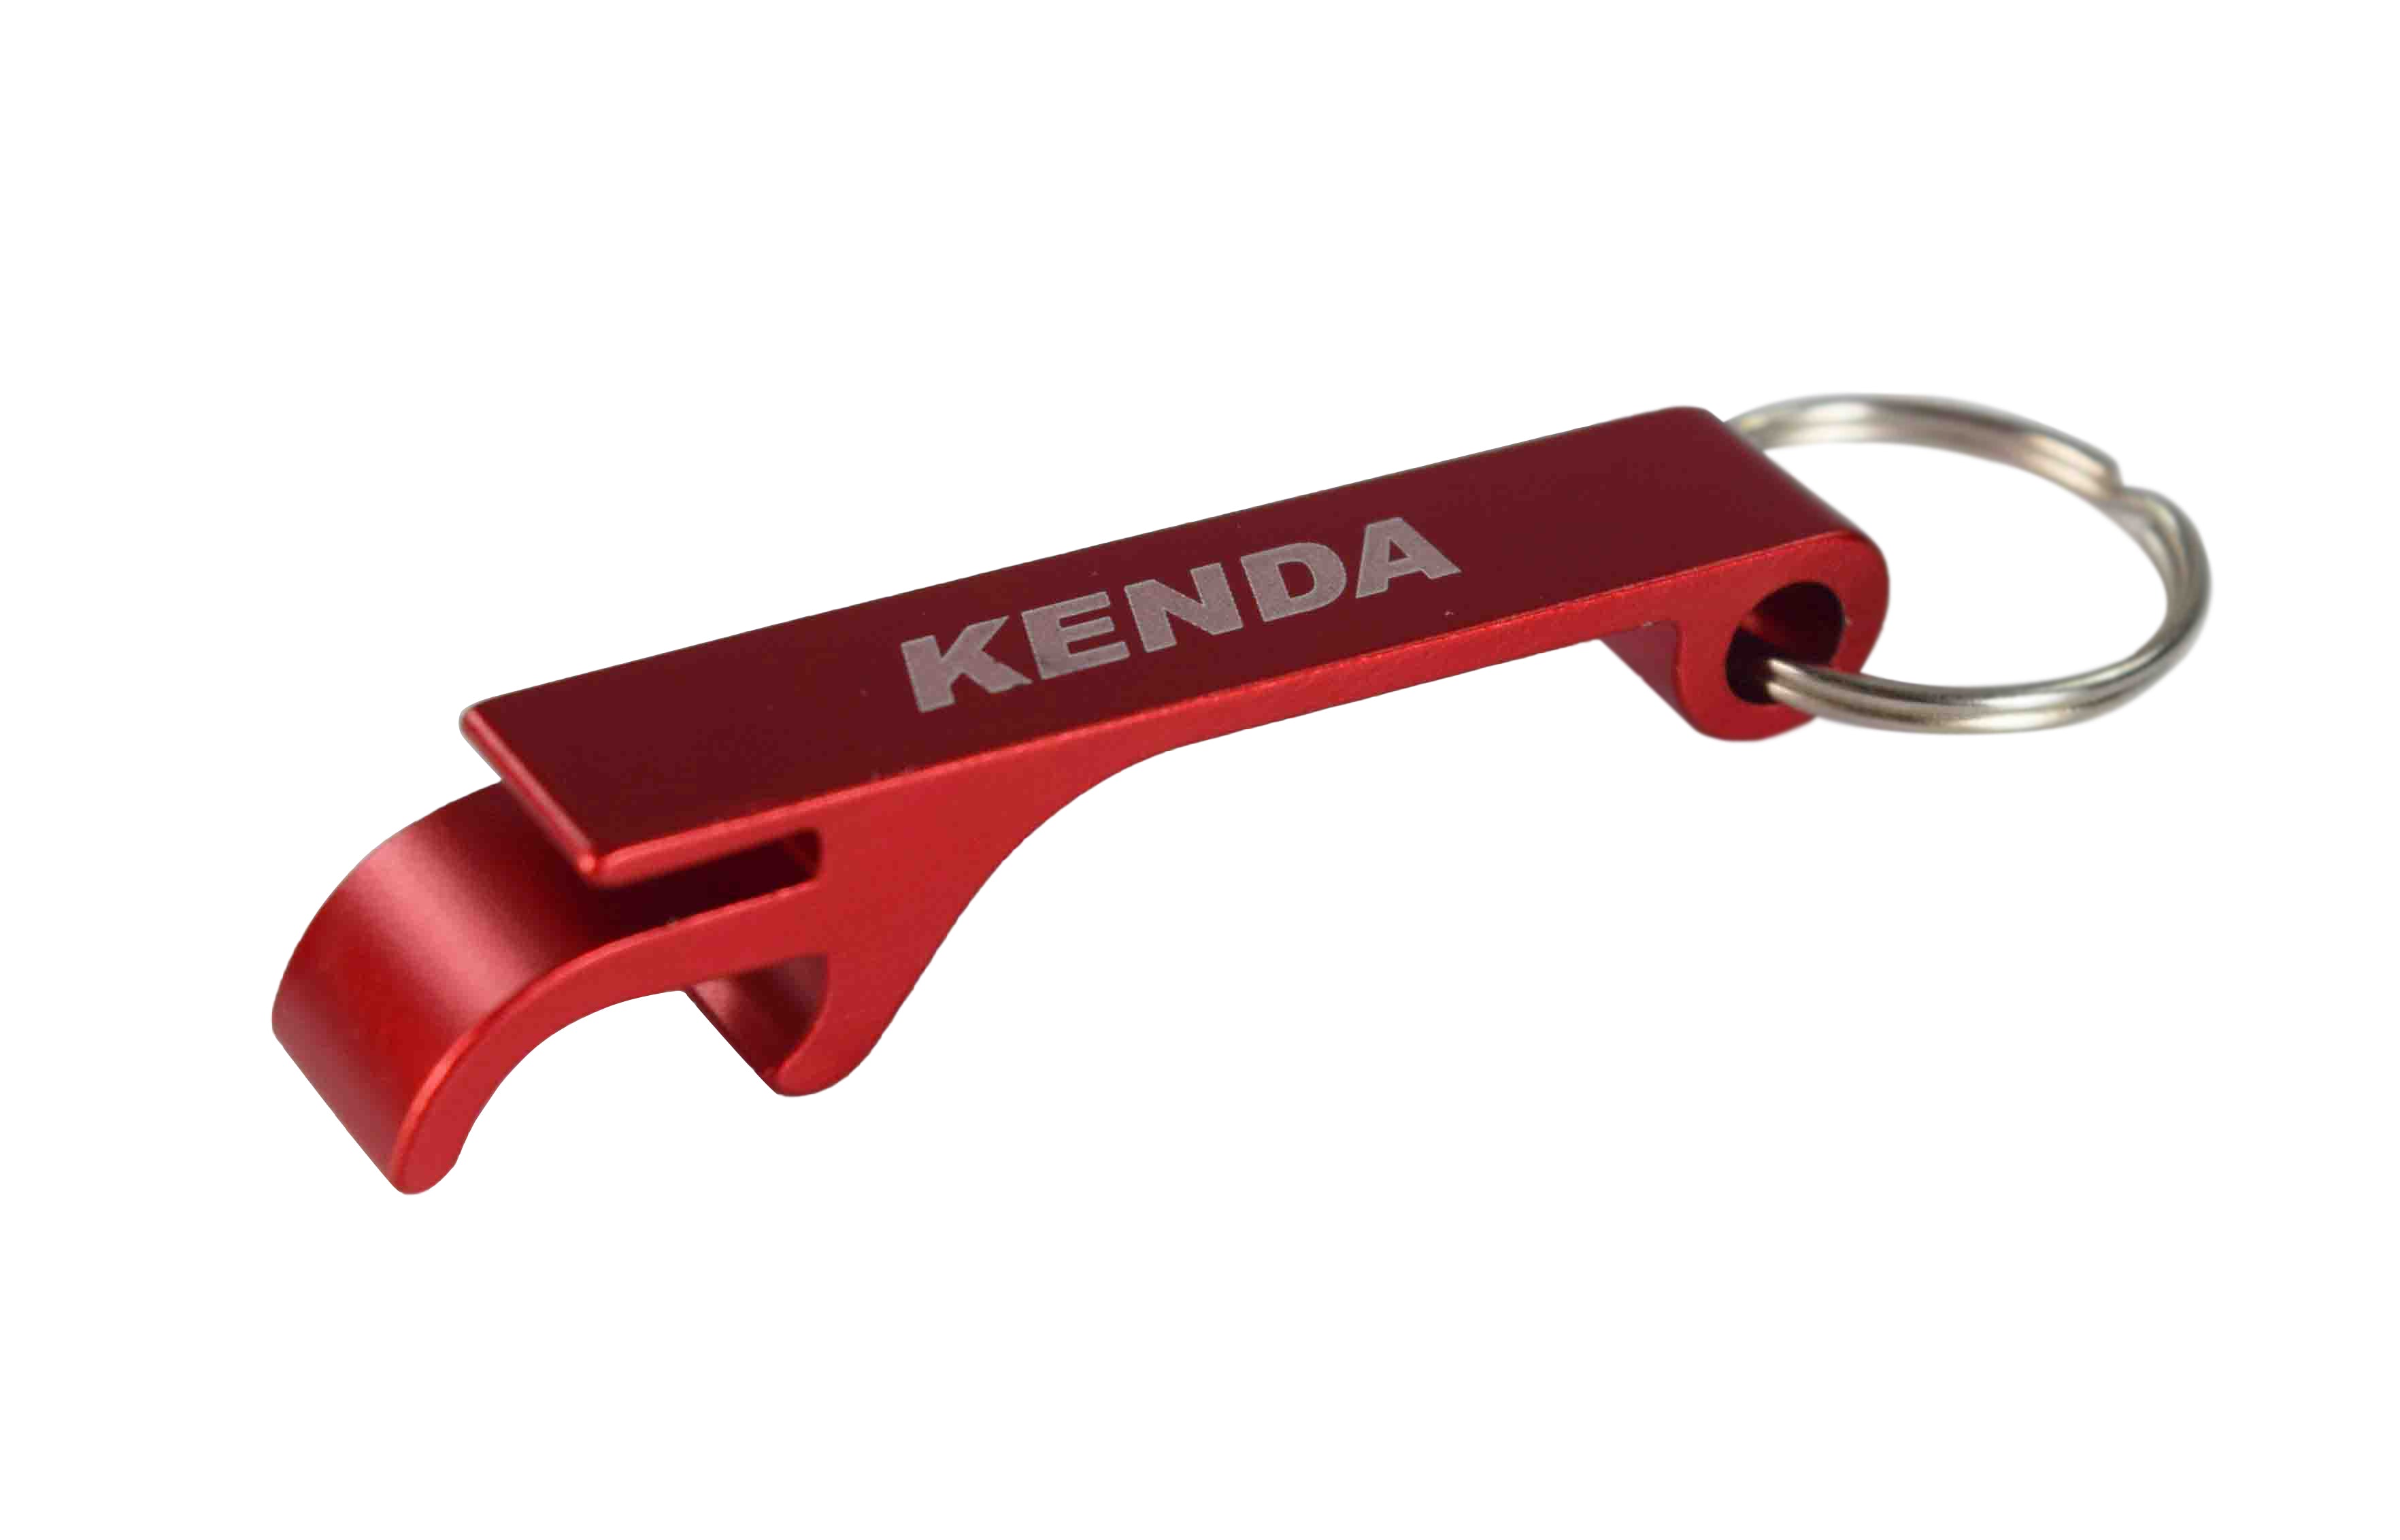 Kenda-22661060-4.80-4.00-8-Load-Star-2-Ply-Tubeless-Trailer-Tire-w-Key-Chain-Bottle-Opener-image-7